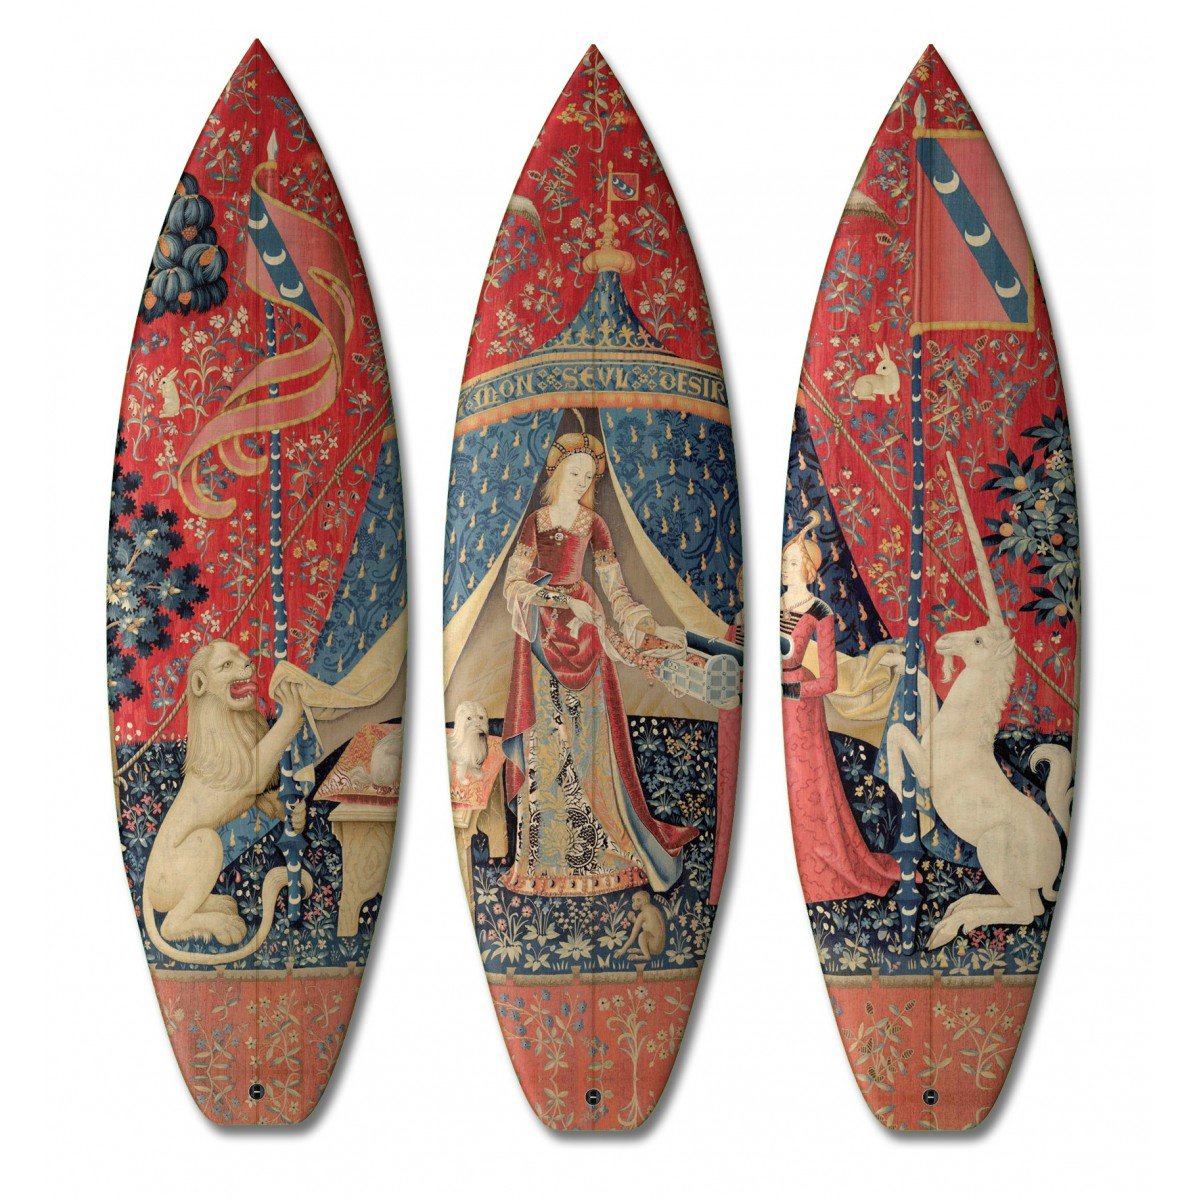 Boom-Art Surfboards